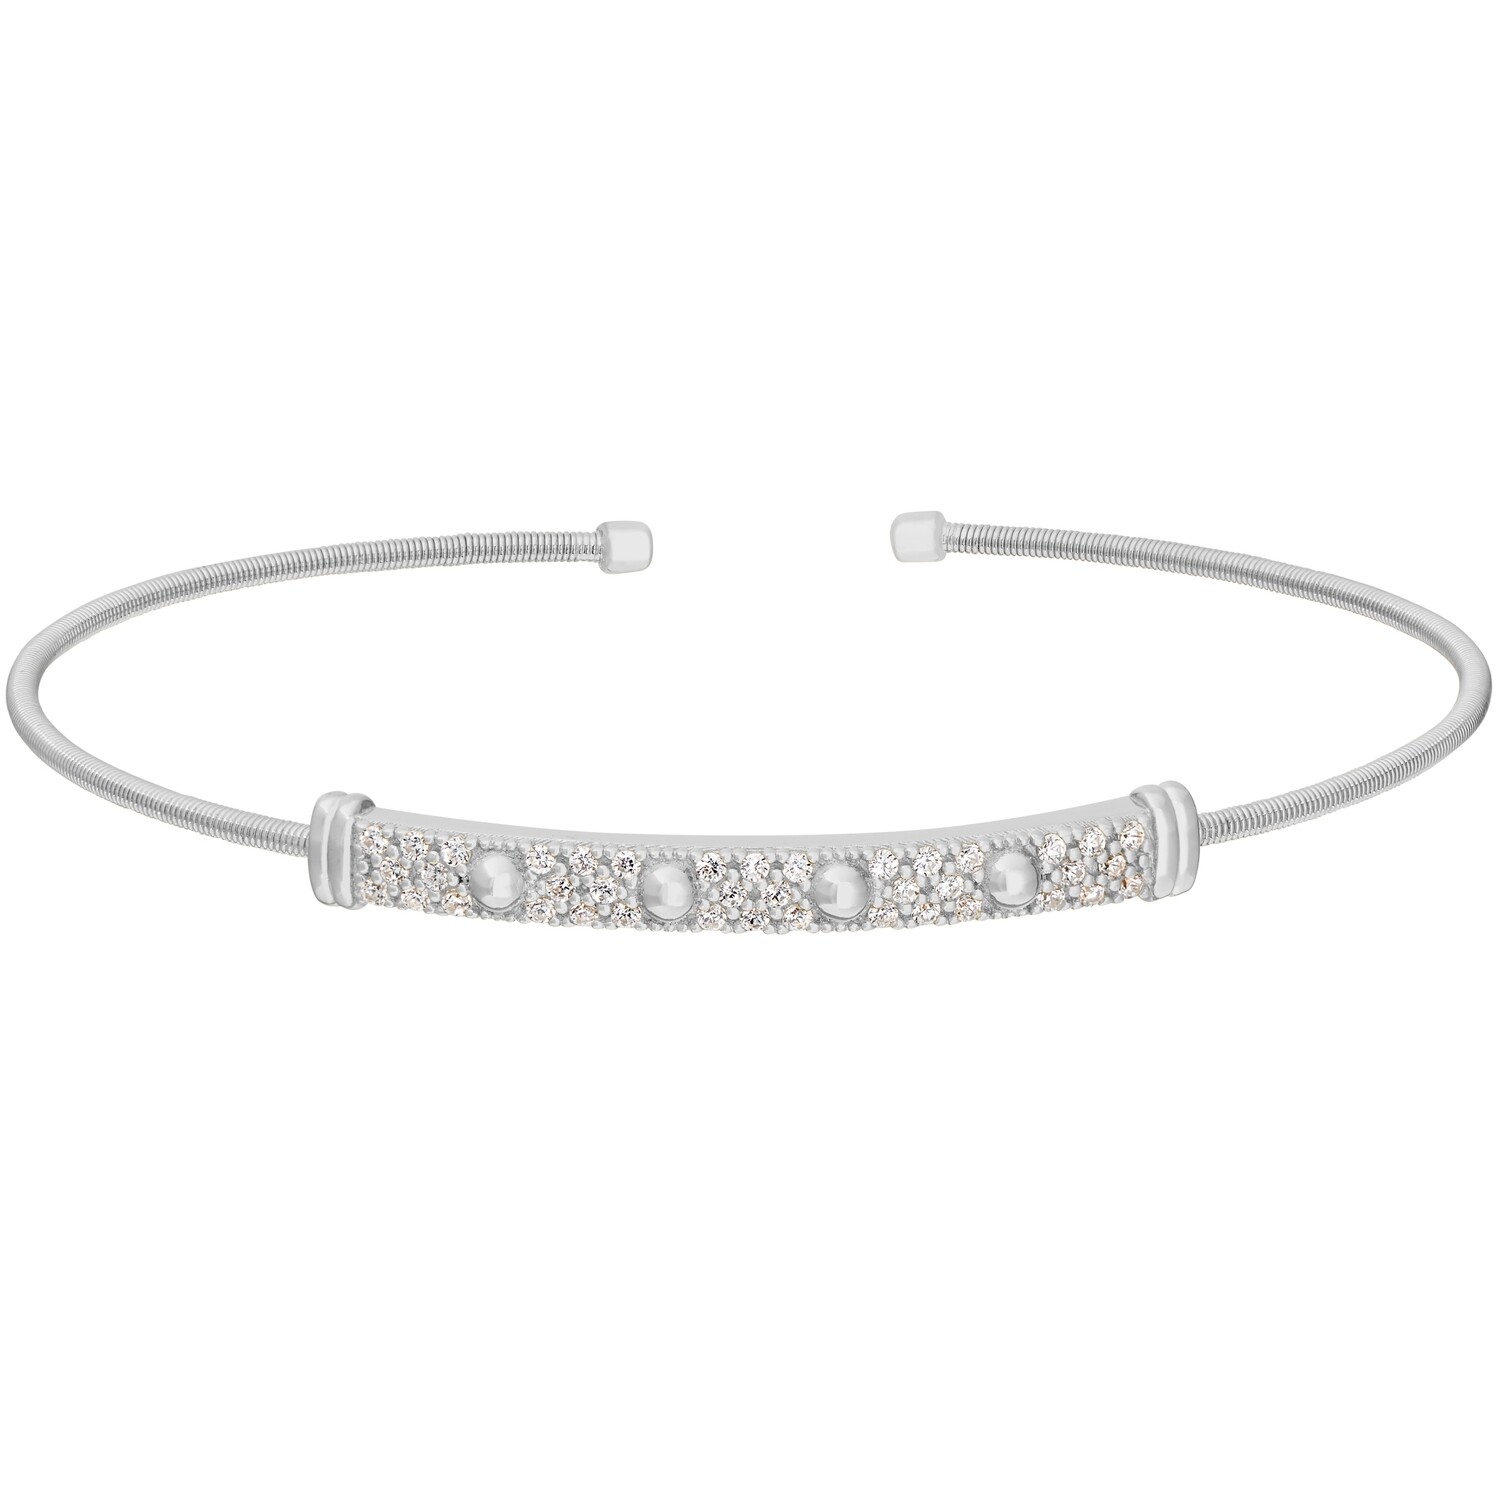 Silver Four Beads & Simulated Diamond Cuff Bracelet